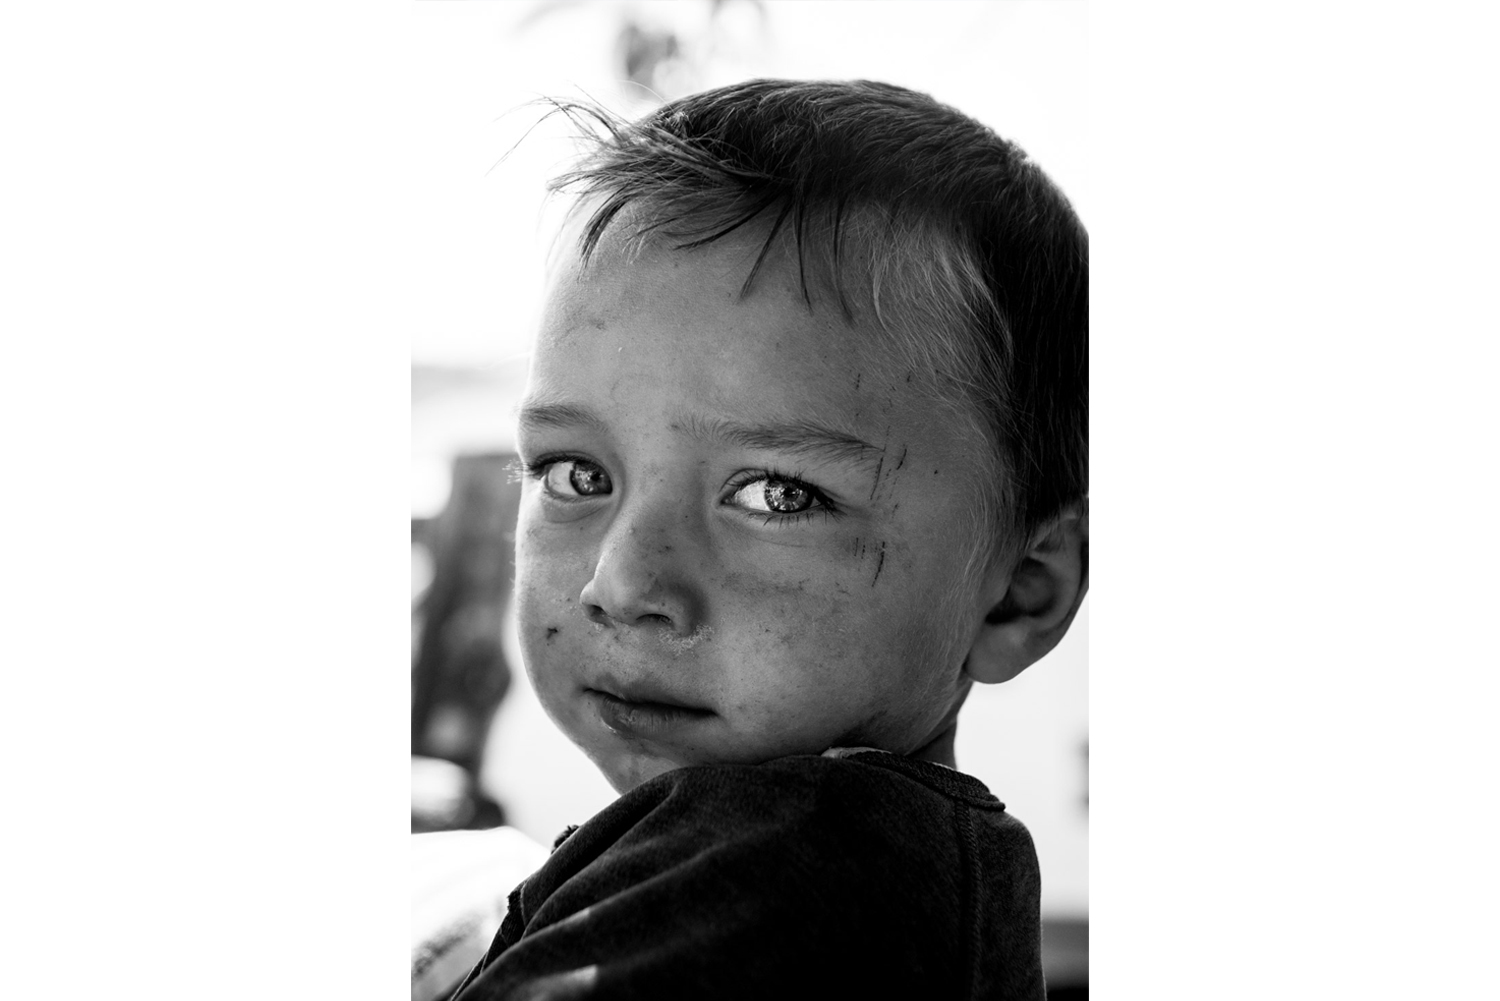 Portrait of a Romanian Boy